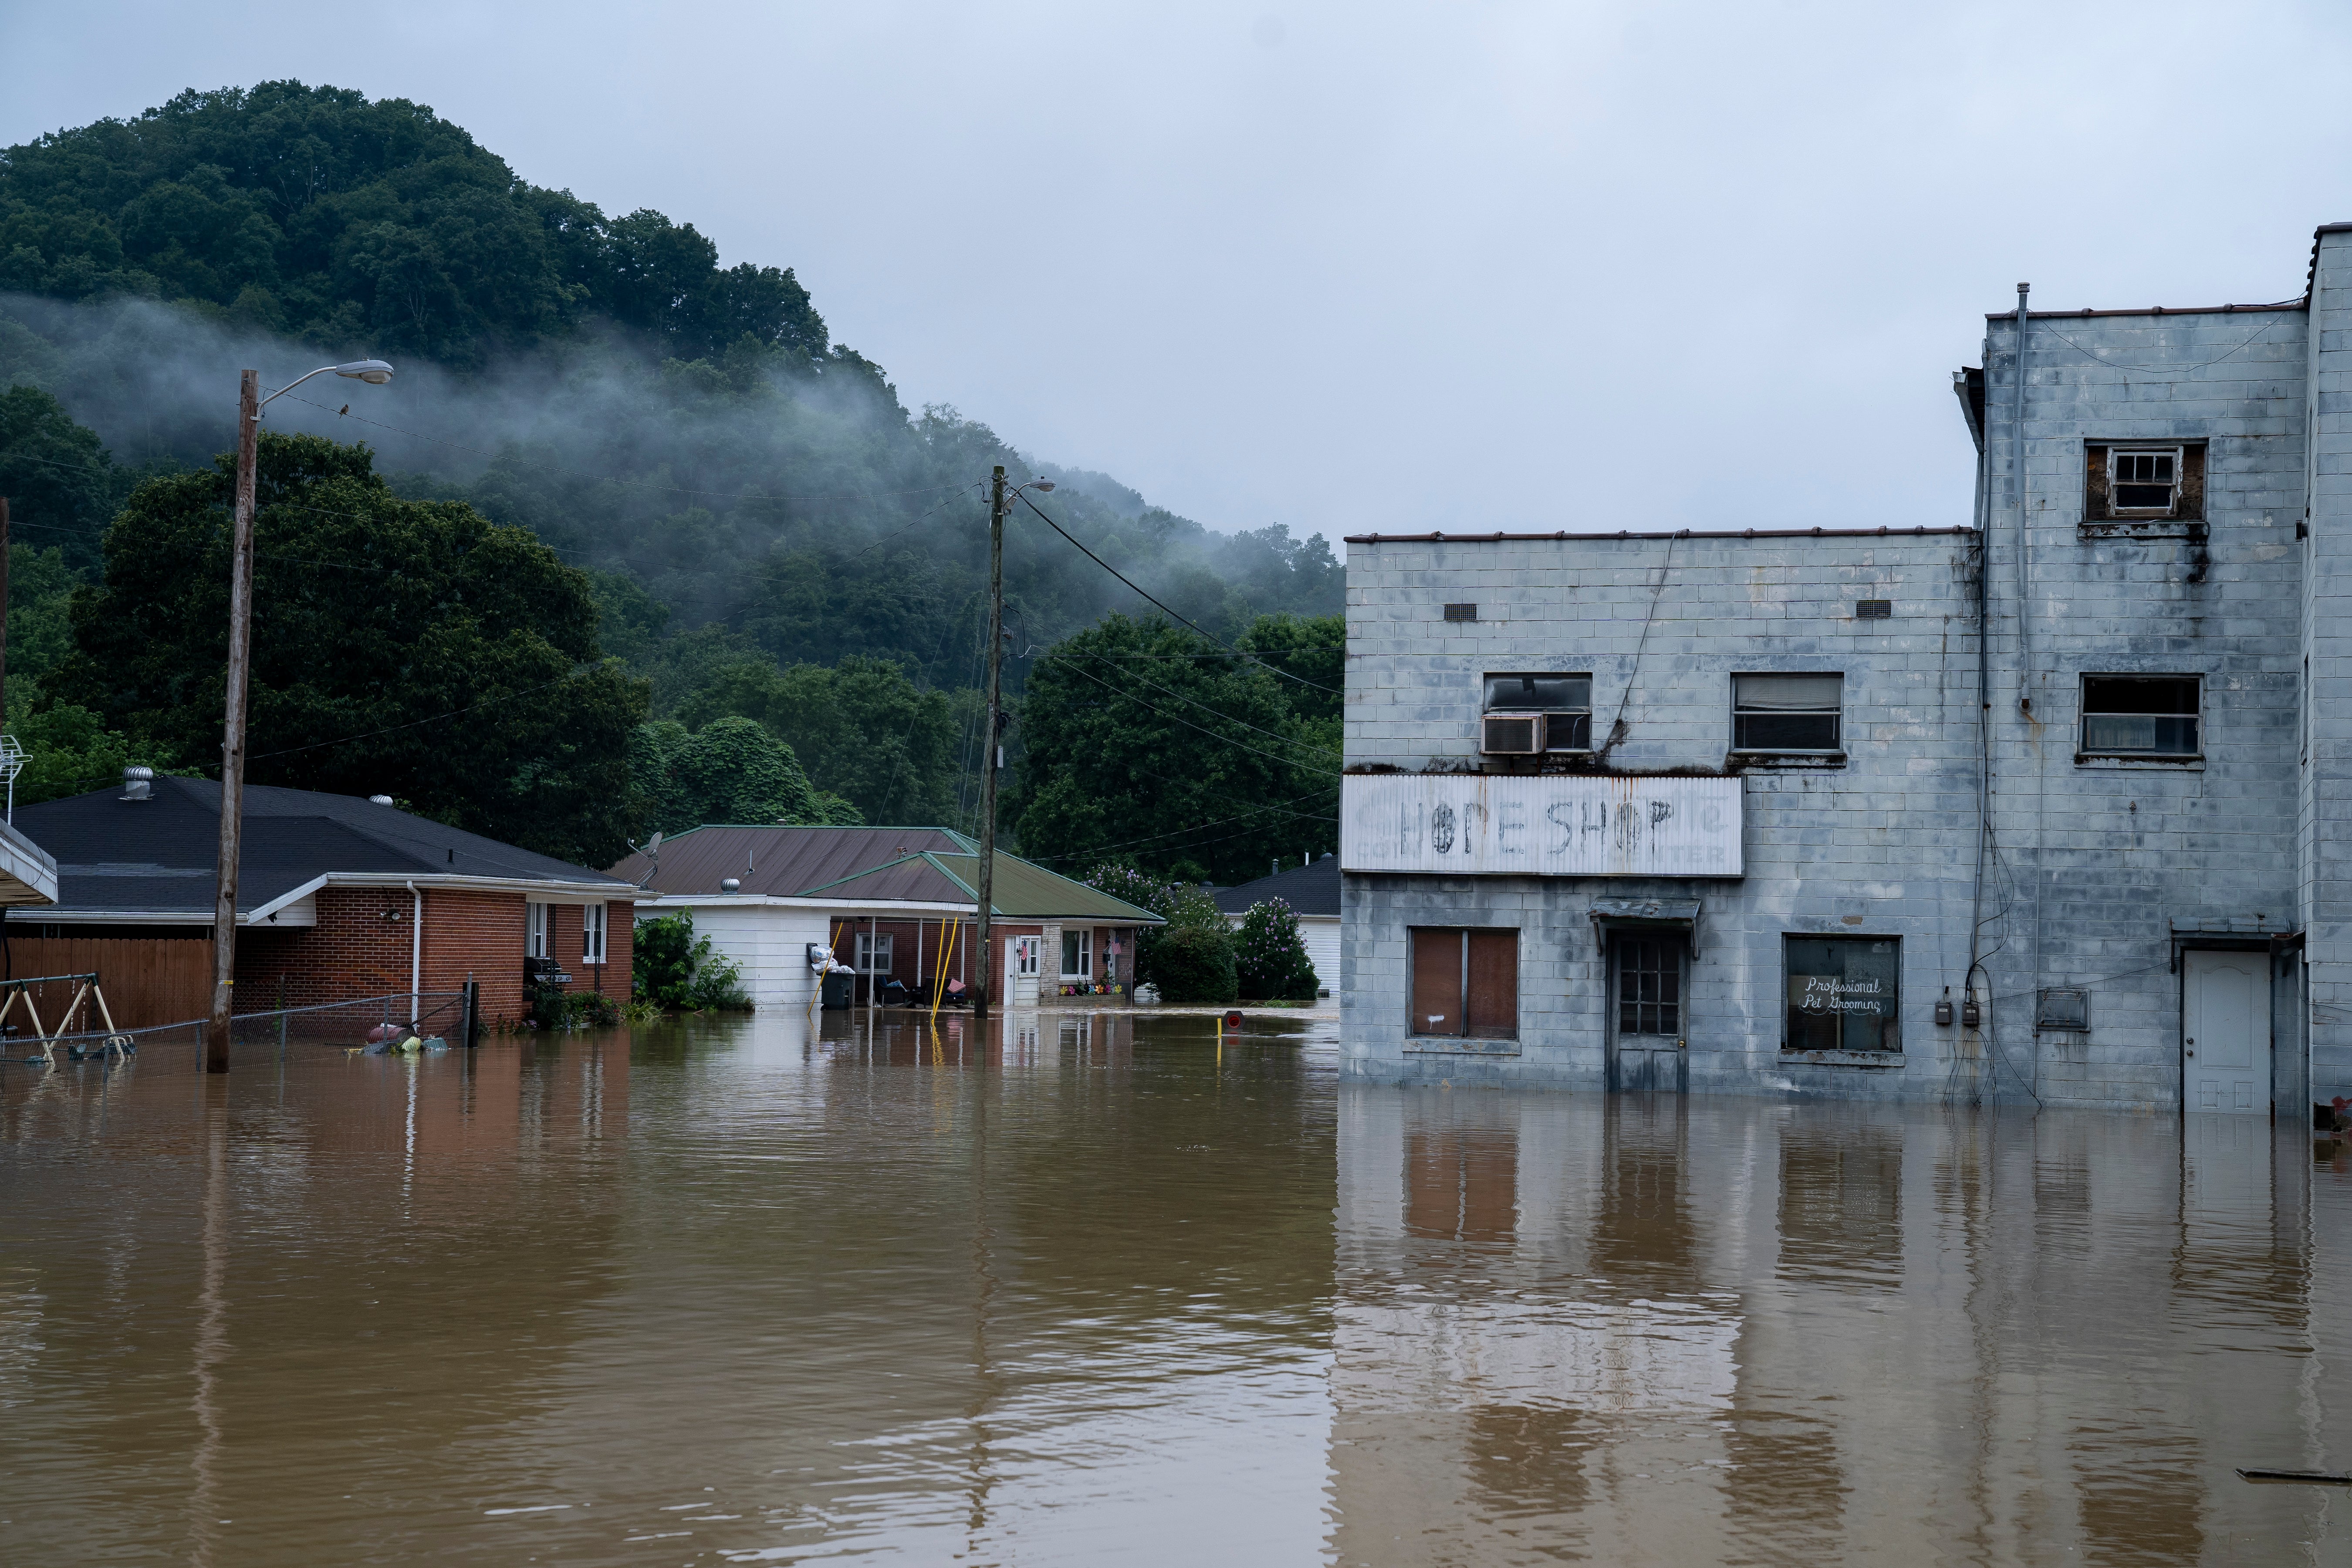 Flooding in downtown Jackson, Kentucky on July 29, 2022 in Breathitt County, Kentucky. (Photo: Michael Swensen, Getty Images)